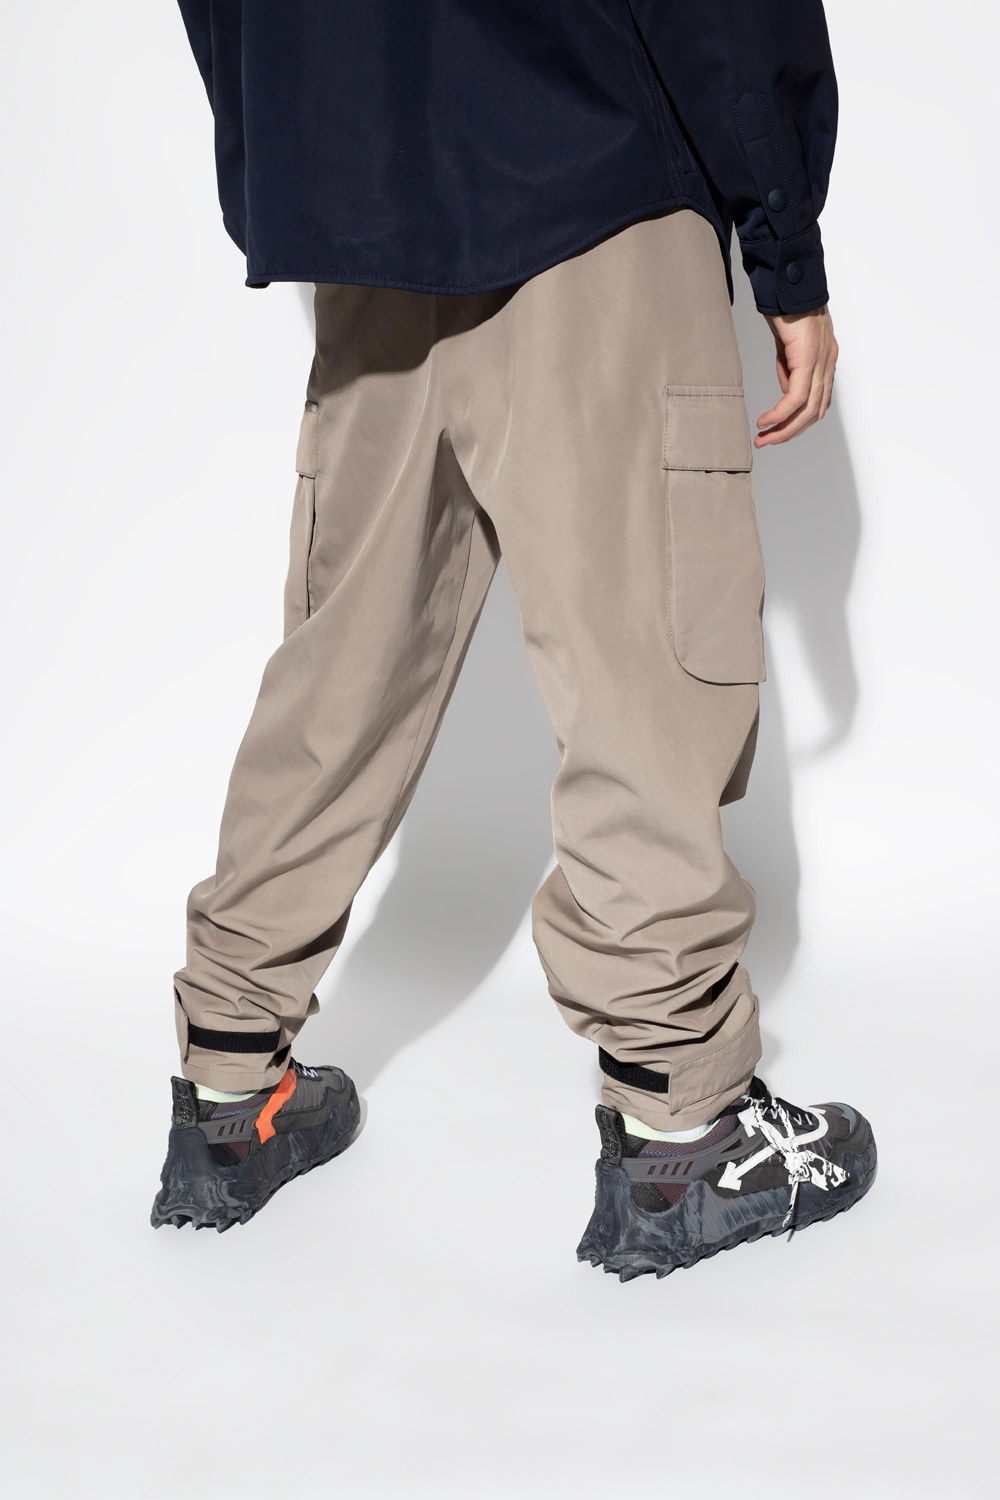 Giorgio Armani Trousers with pockets | Men's Clothing | Vitkac